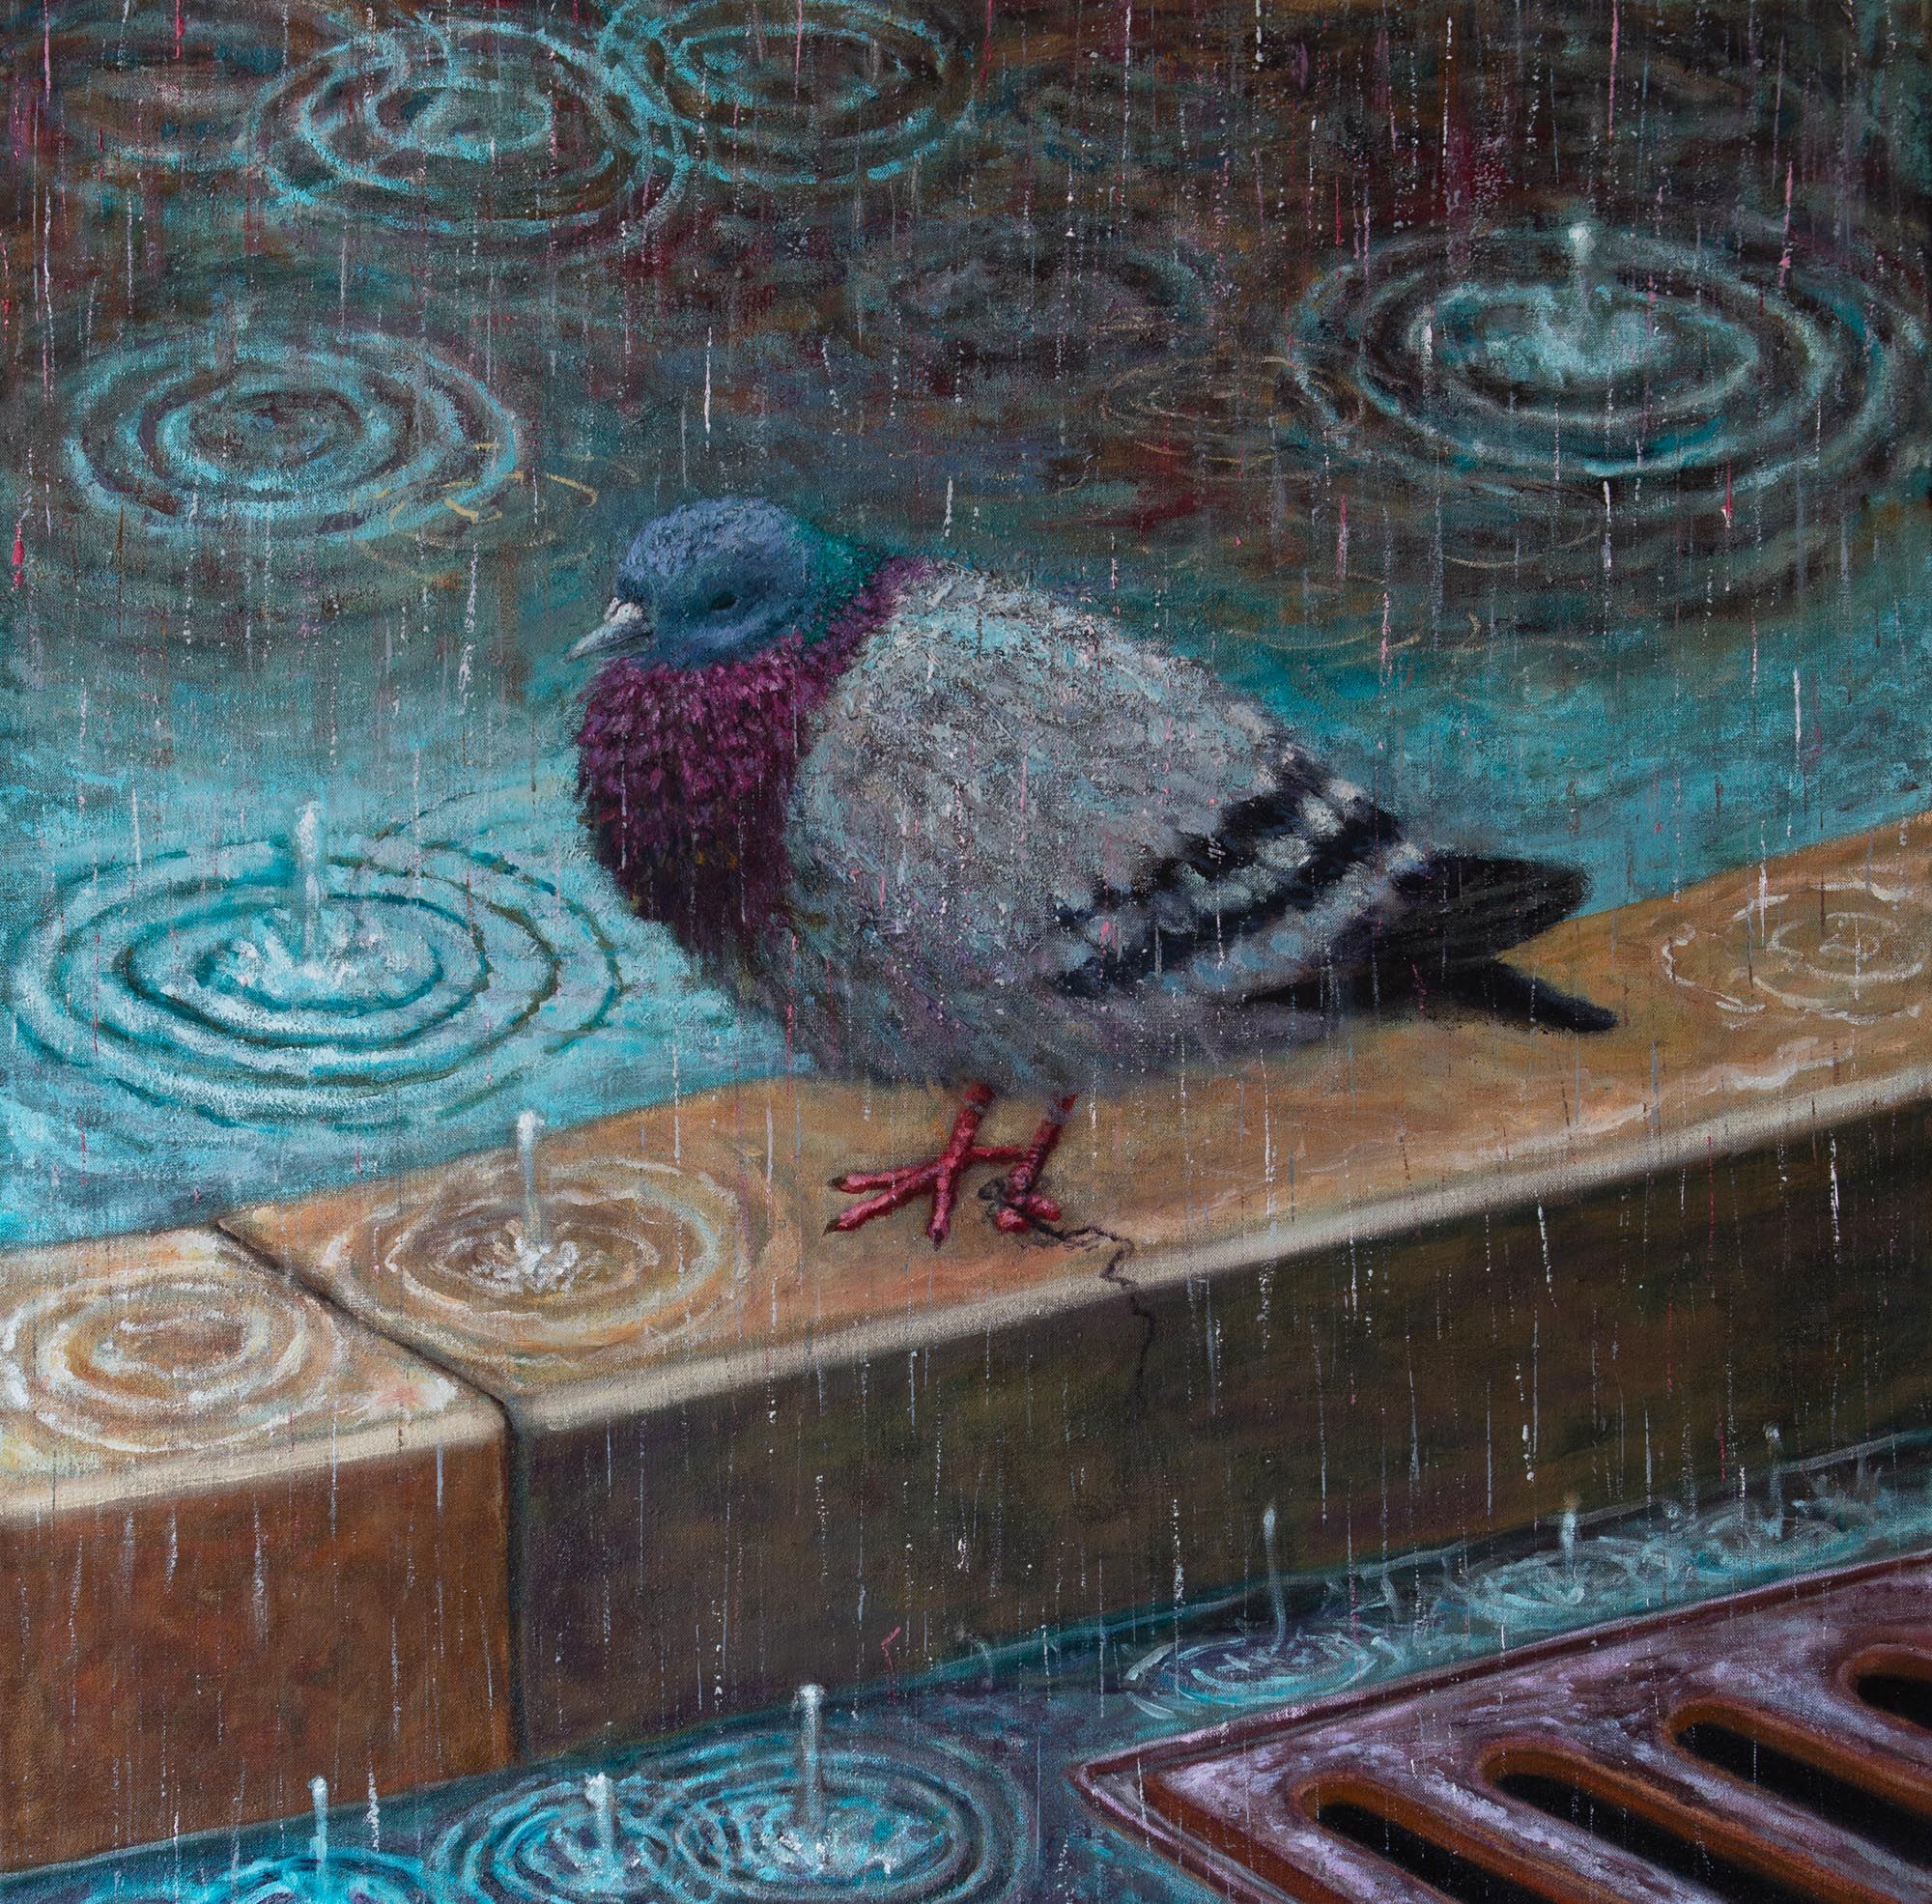 Limping pigeon in rain